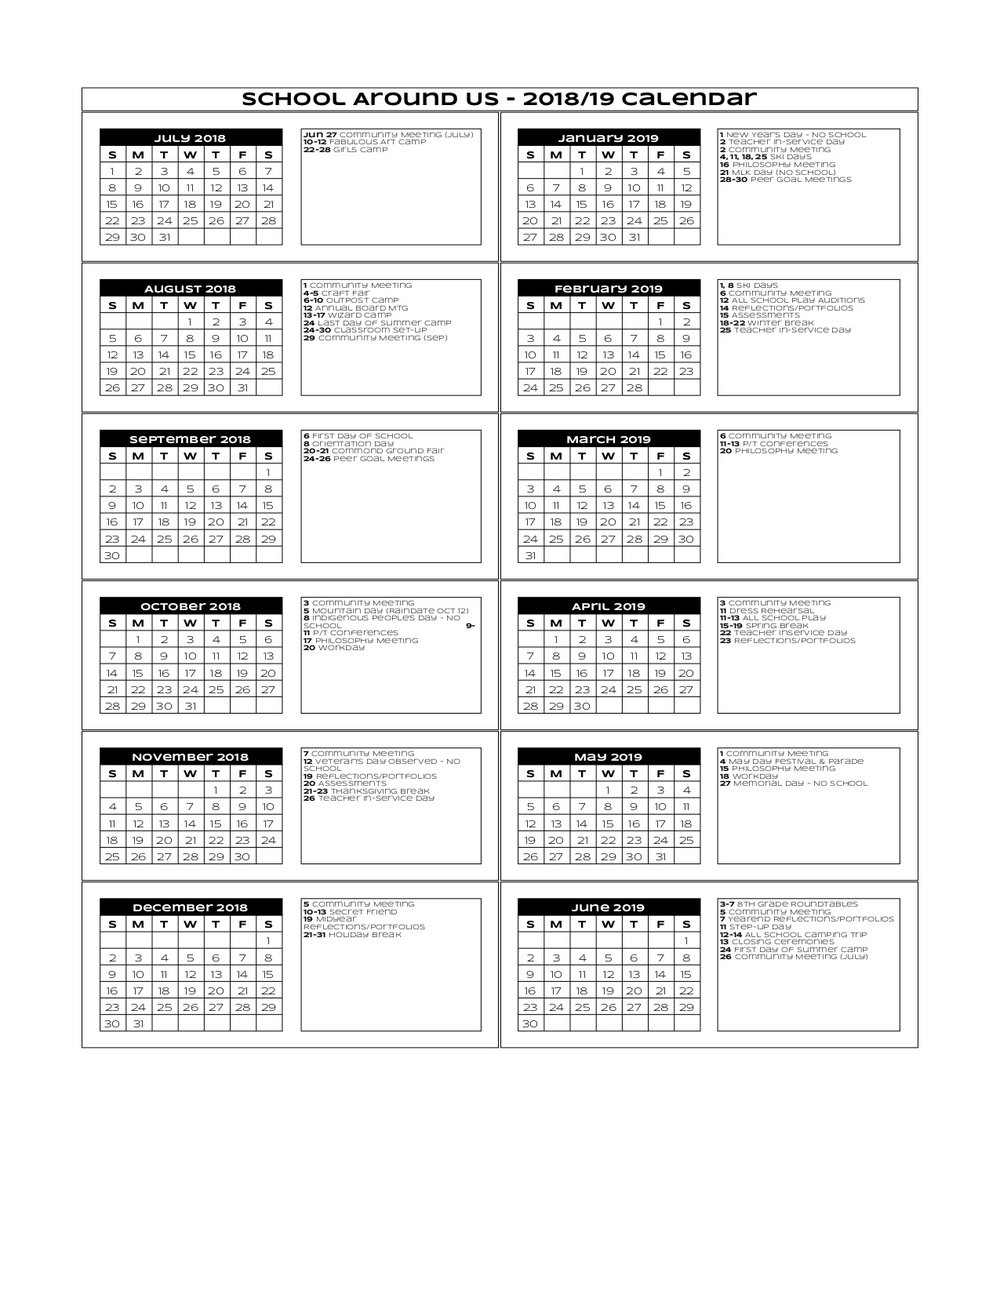 School Calendar — The School Around Us Impressive Sau 6 School Calendar